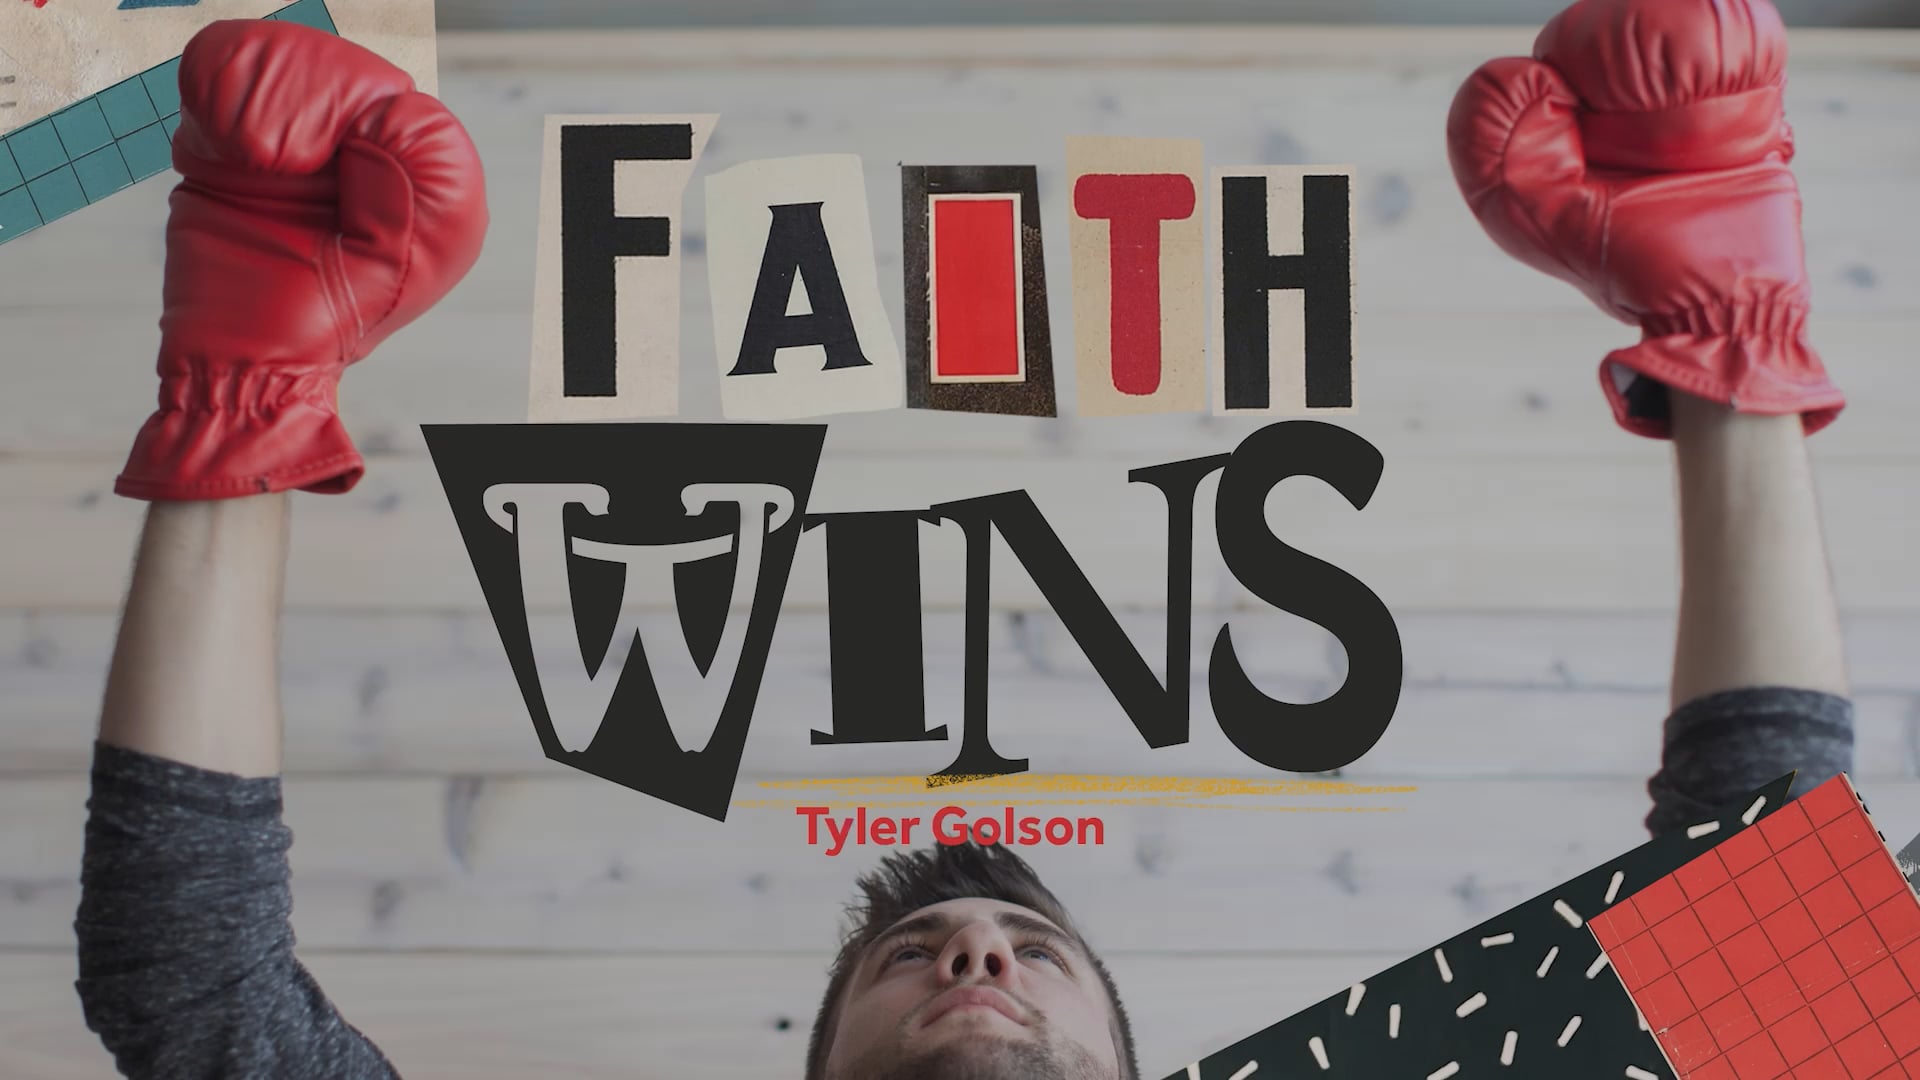 01222023 | Faith Wins | Guest Speaker Tyler Golson | Message Only